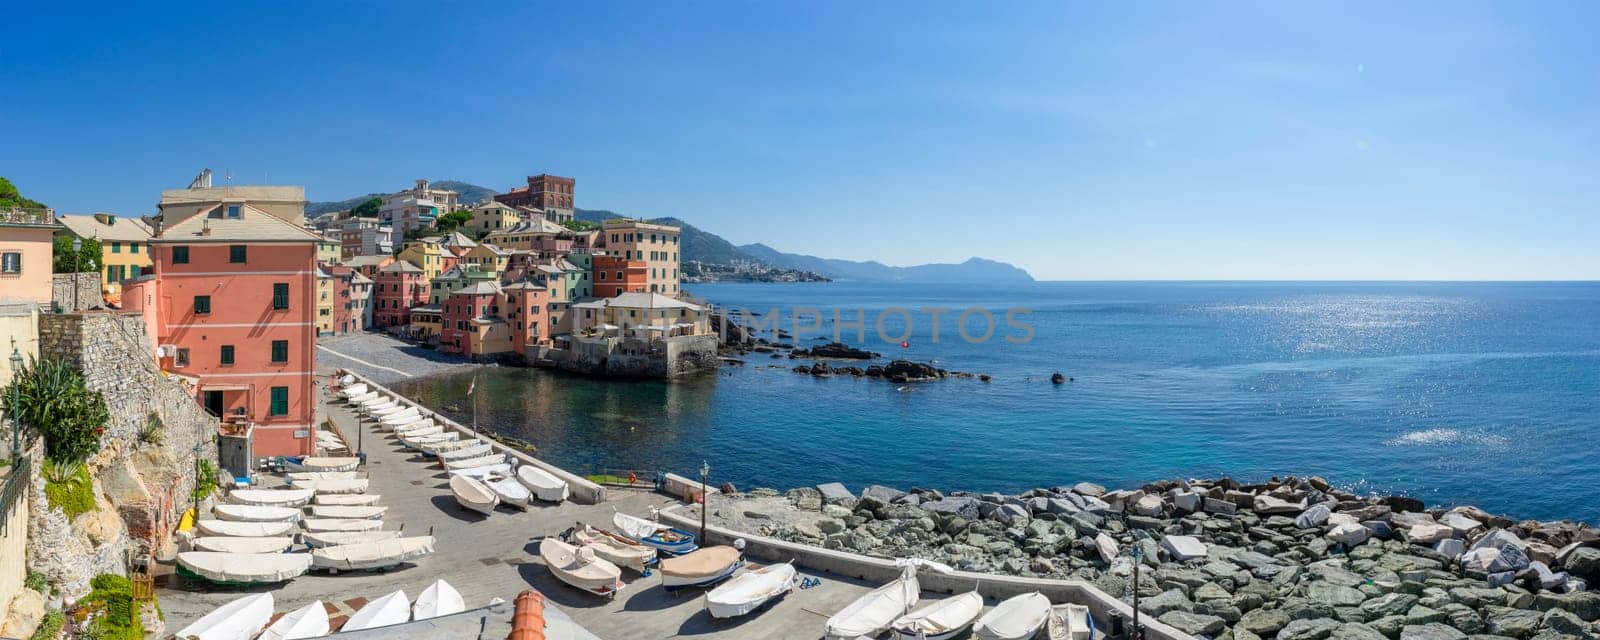 Mediterranean Serenity: Coastal Village Panorama by Juanjo39